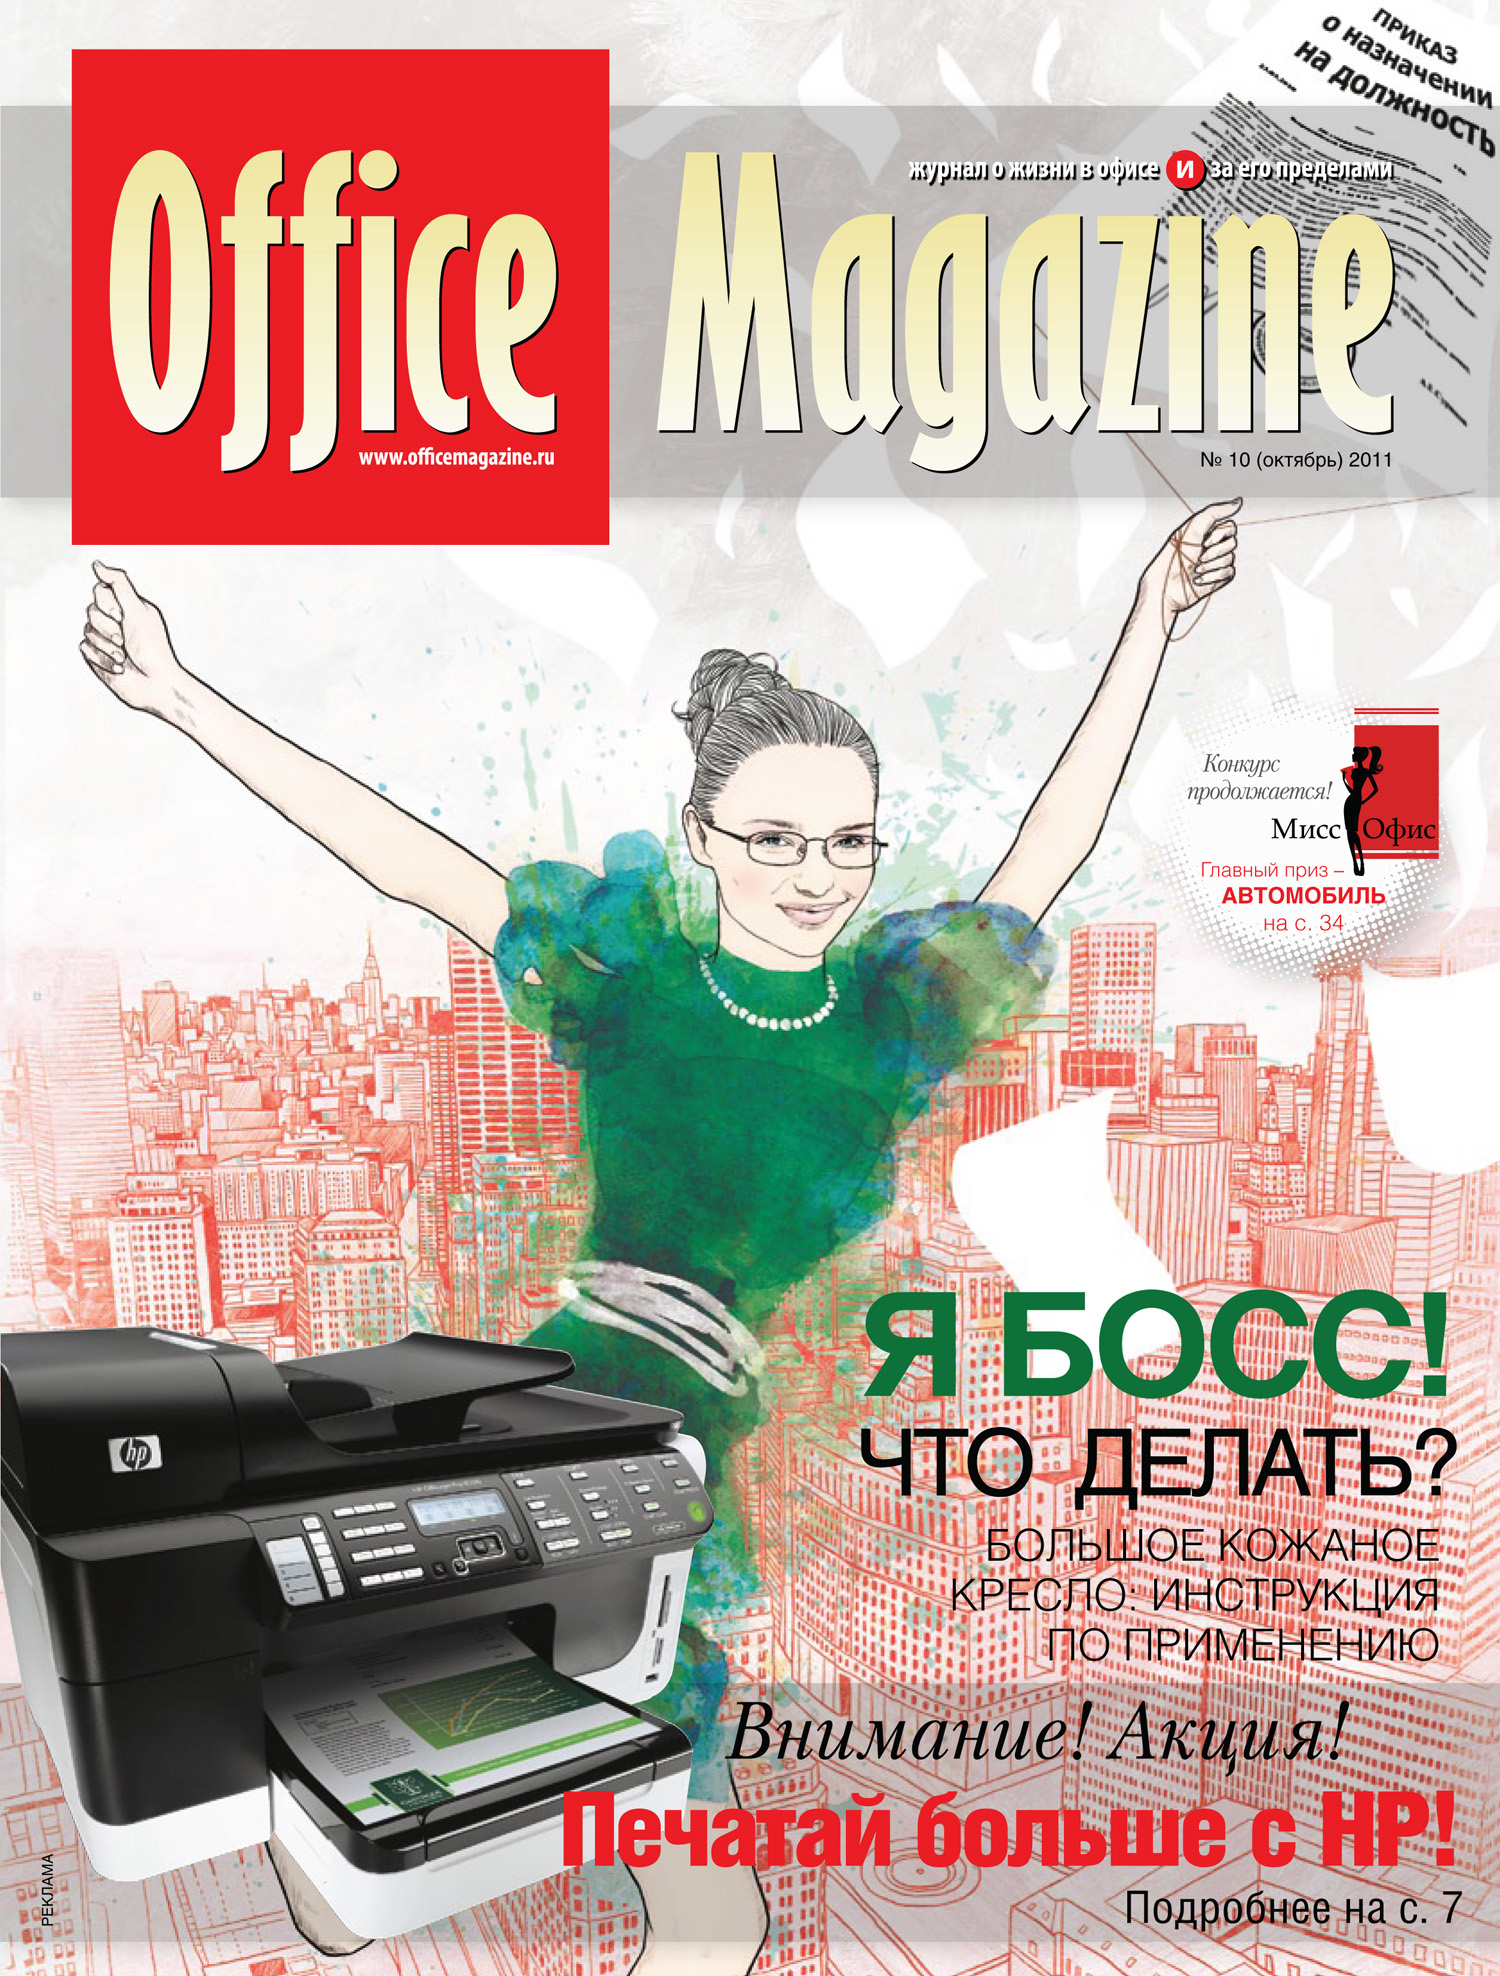 Сайт серий журнал. Журнал Office. Офисный журнал. Комус журнал. Magazine Office.